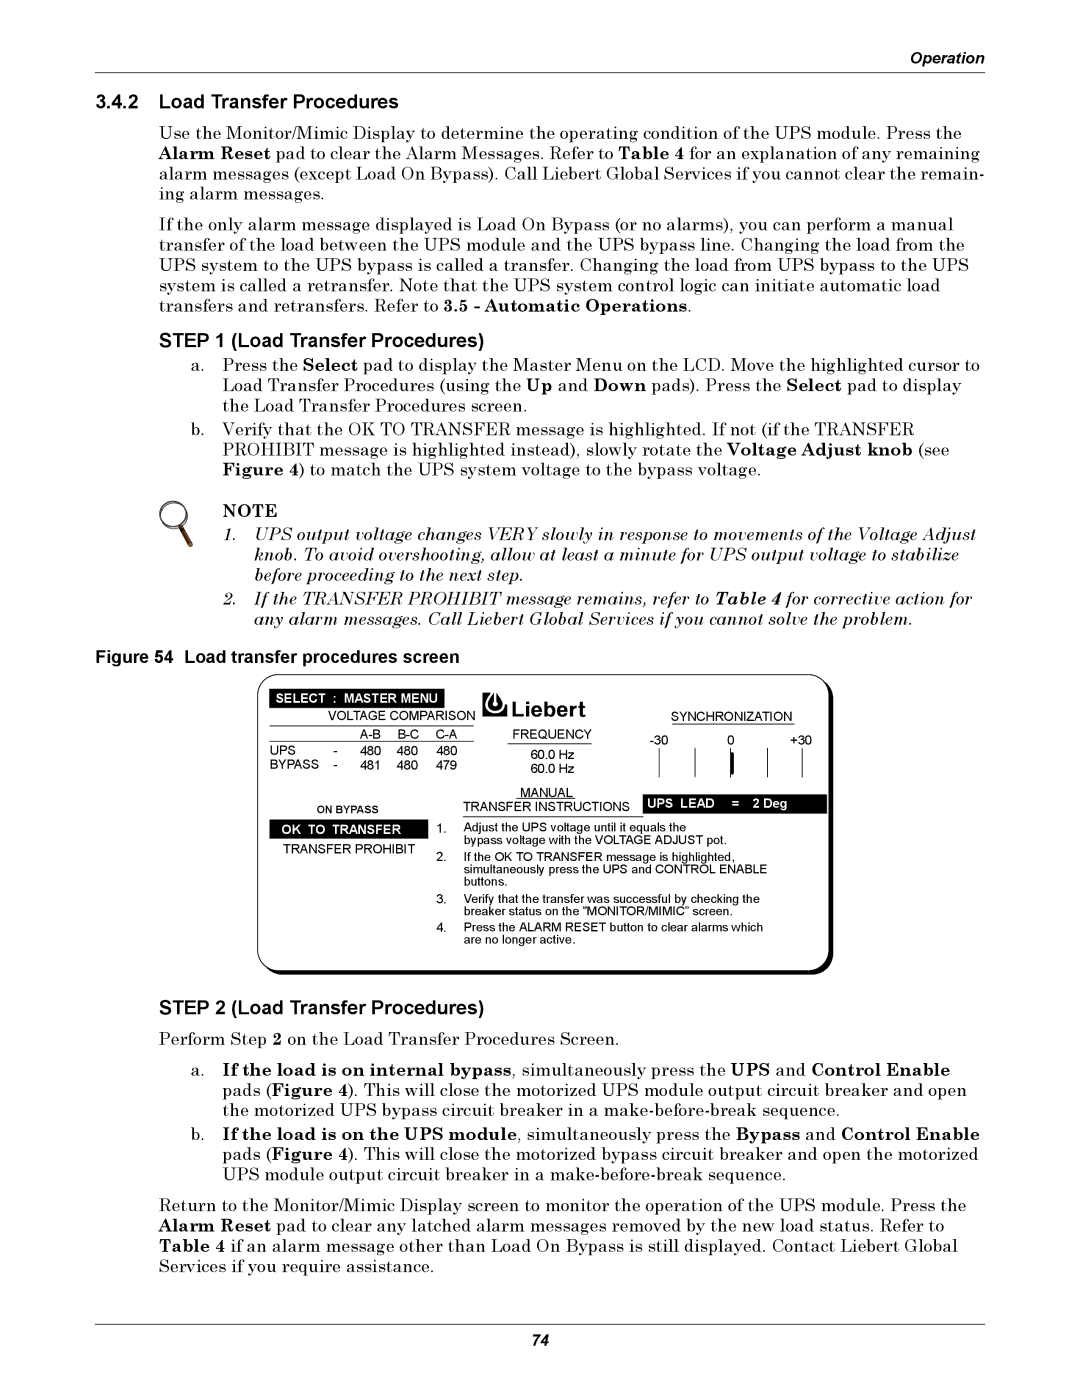 Liebert 610 manual Load Transfer Procedures, Load transfer procedures screen 